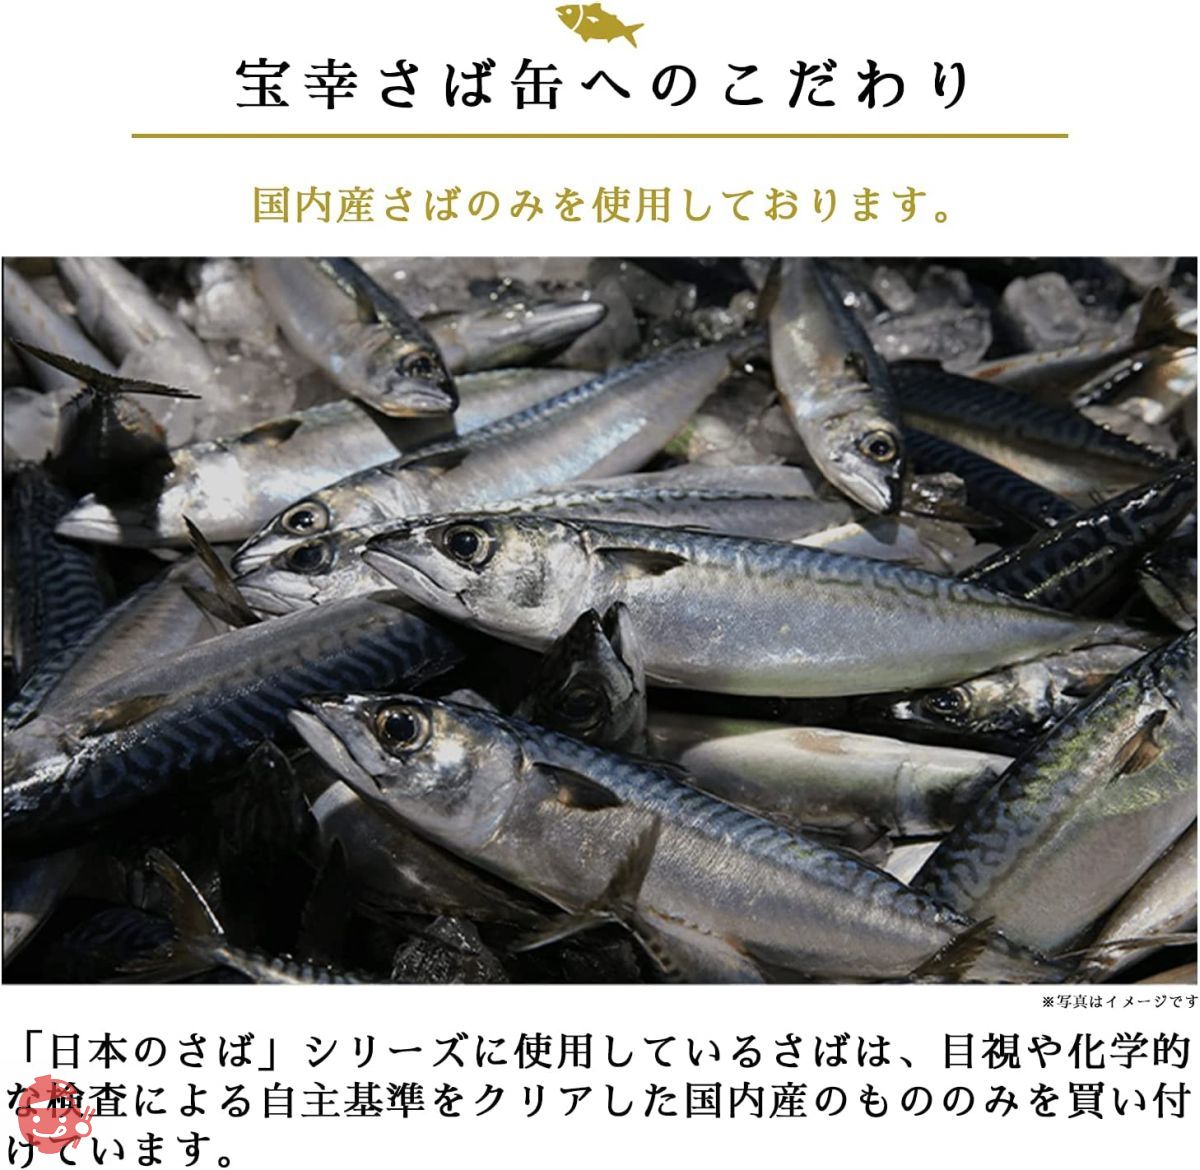 Hoko Japanese mackerel (boiled in miso) 190g x 12 cans